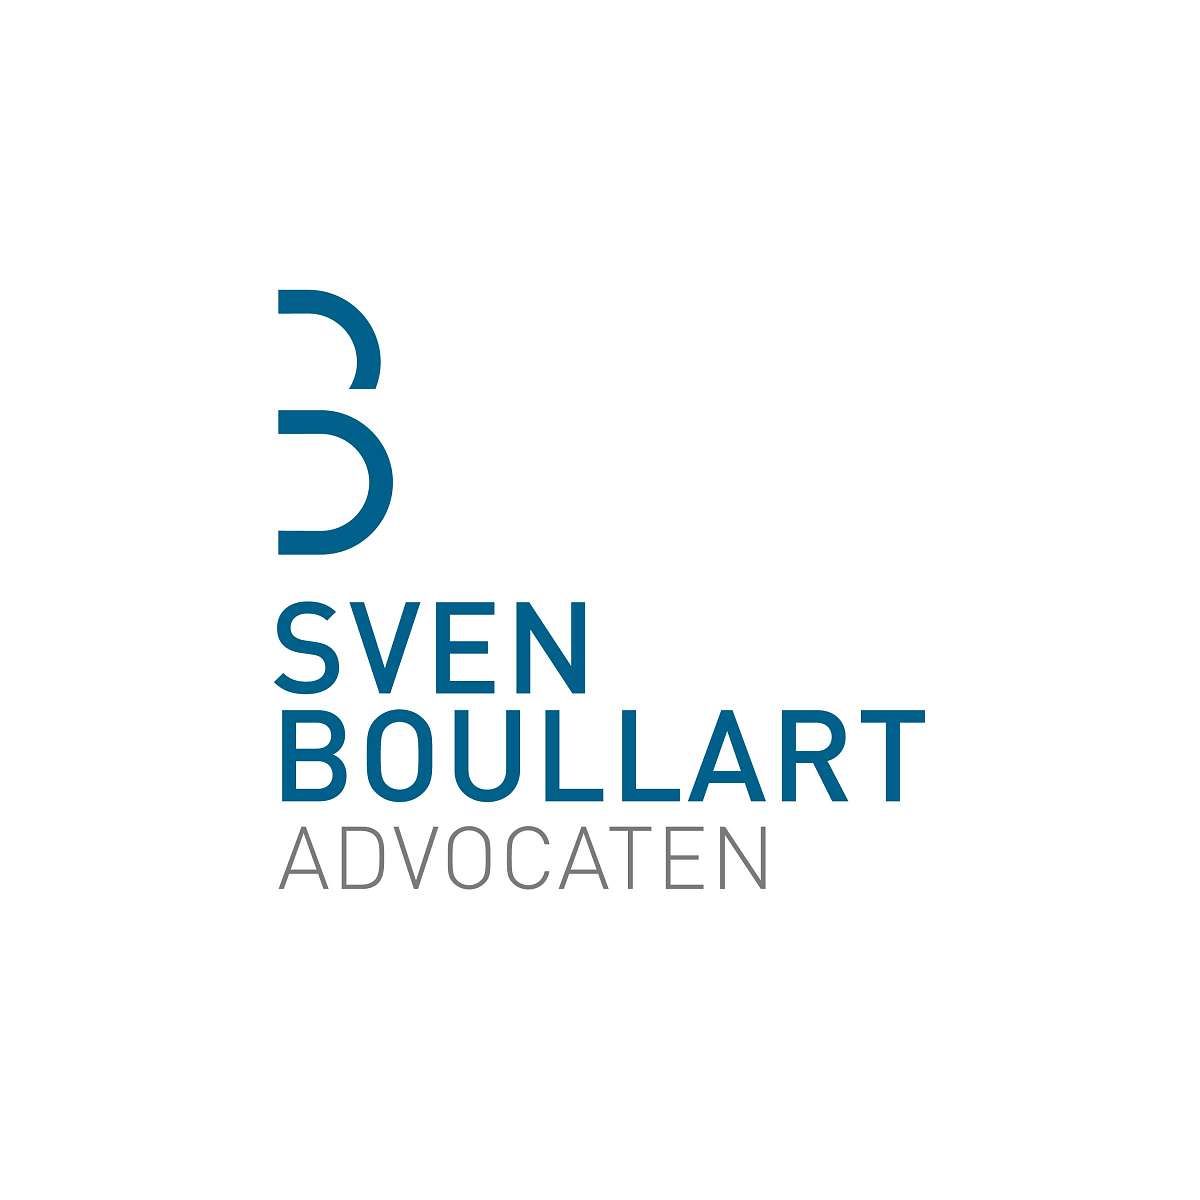 Sven Boullart Advocaten